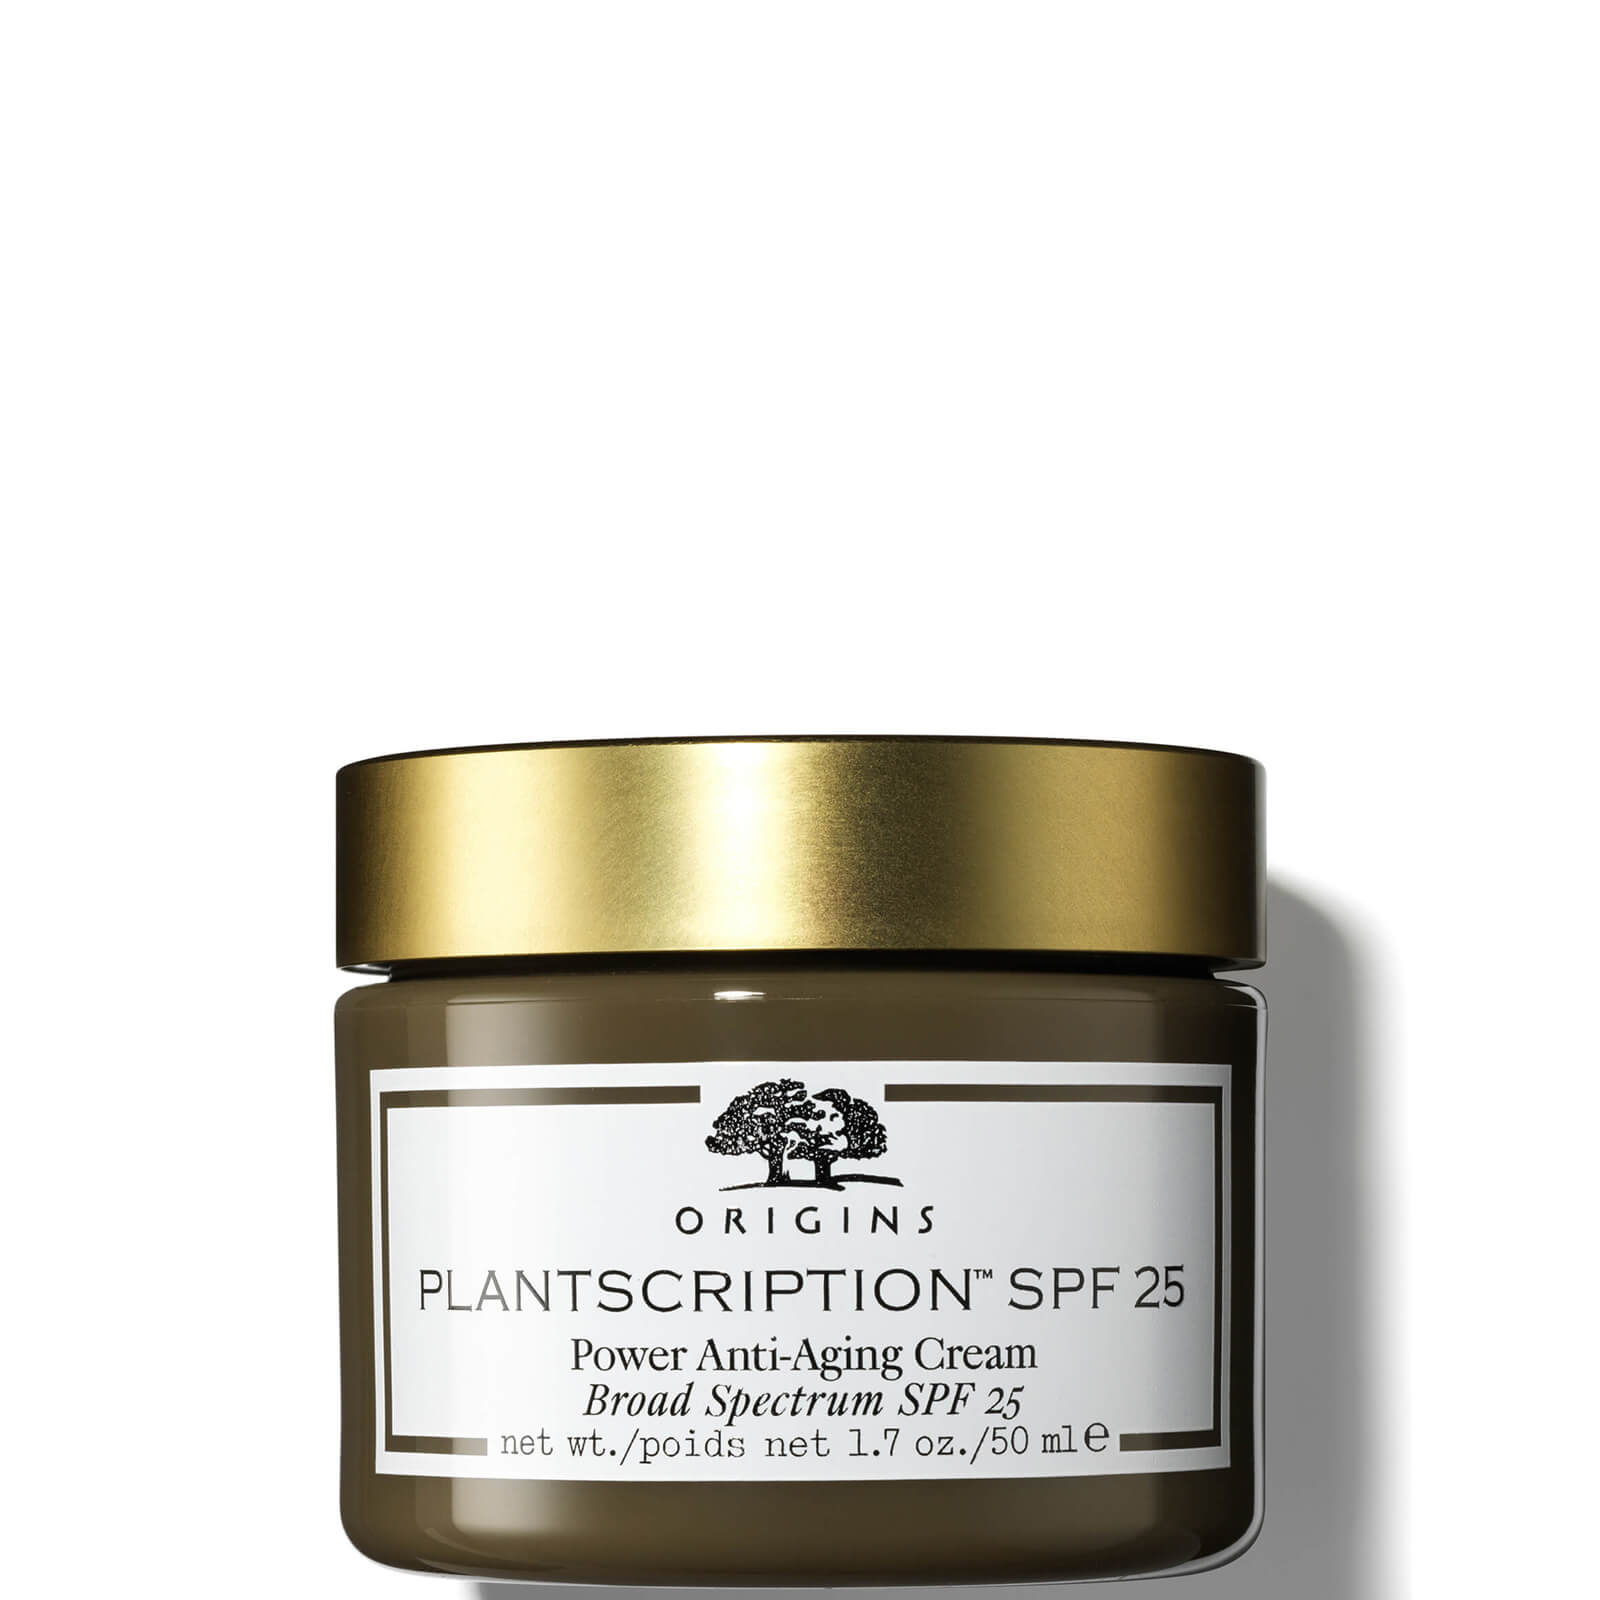 Origins Plantscriptiontm SPF 25 Power Anti-Ageing Cream 50ml